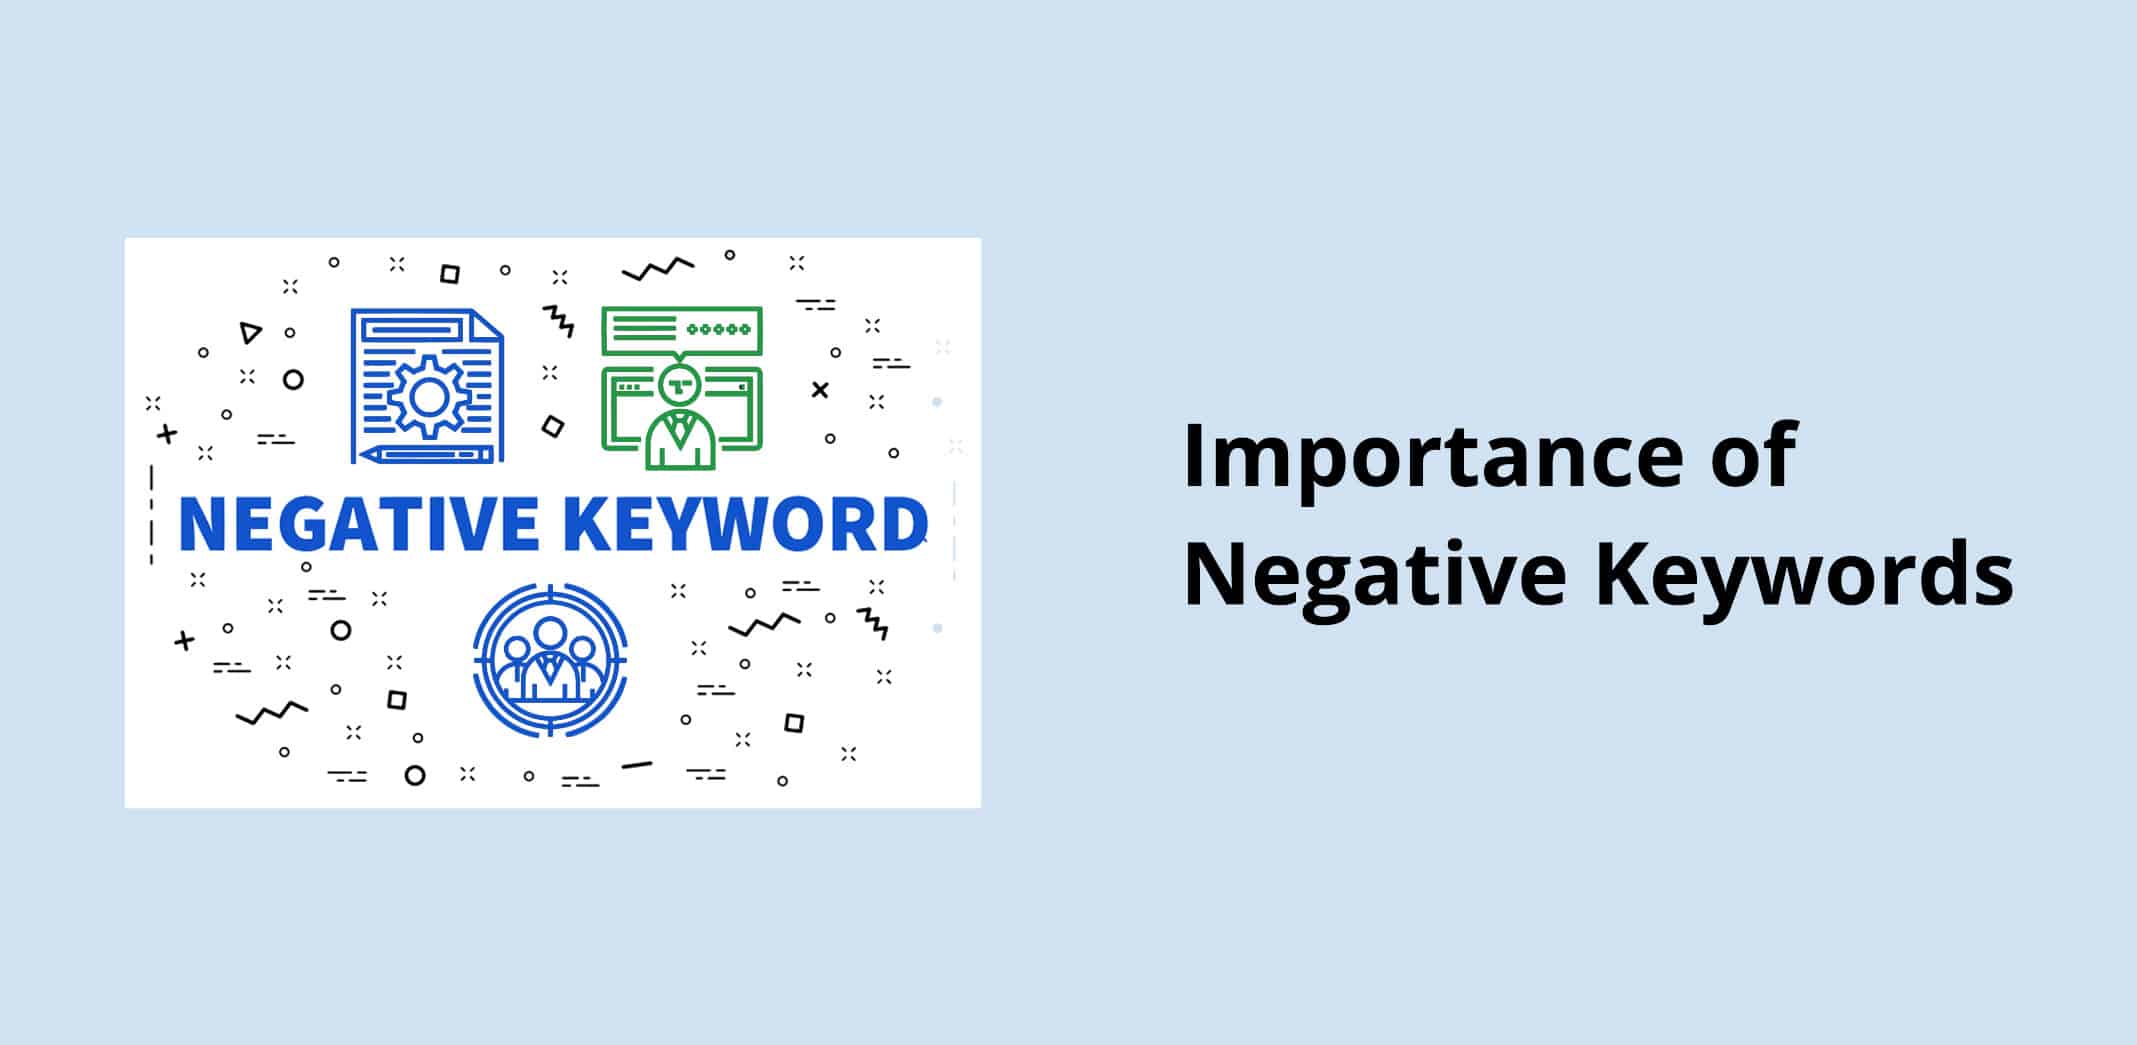 Importance of Negative Keywords